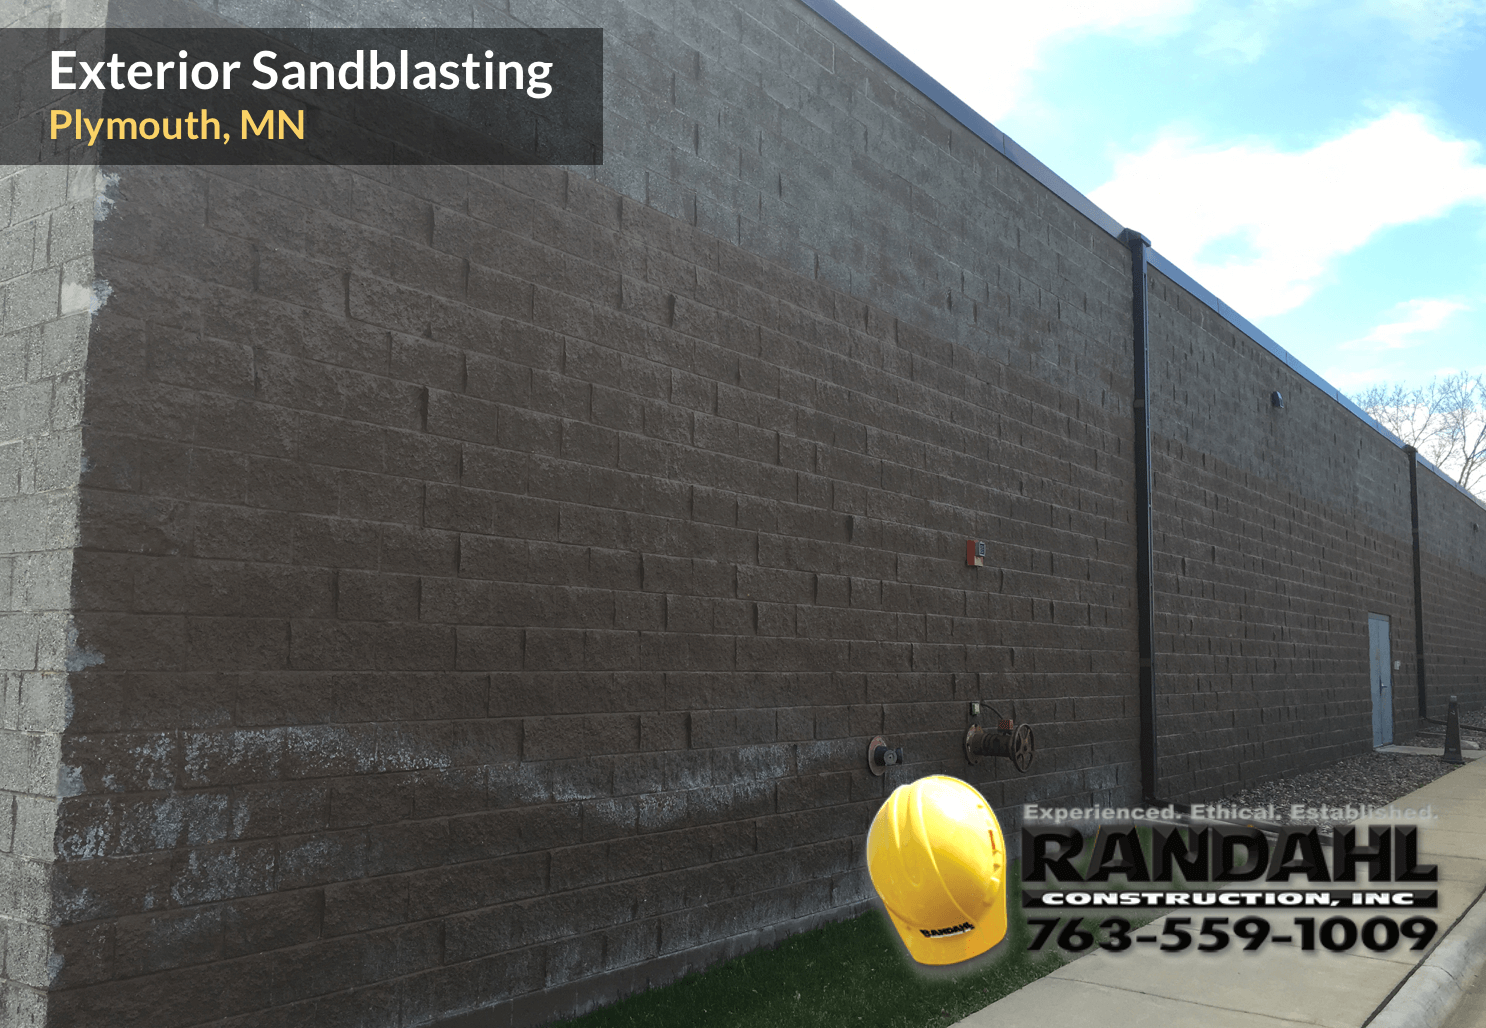 mn exterior sandblast contractor